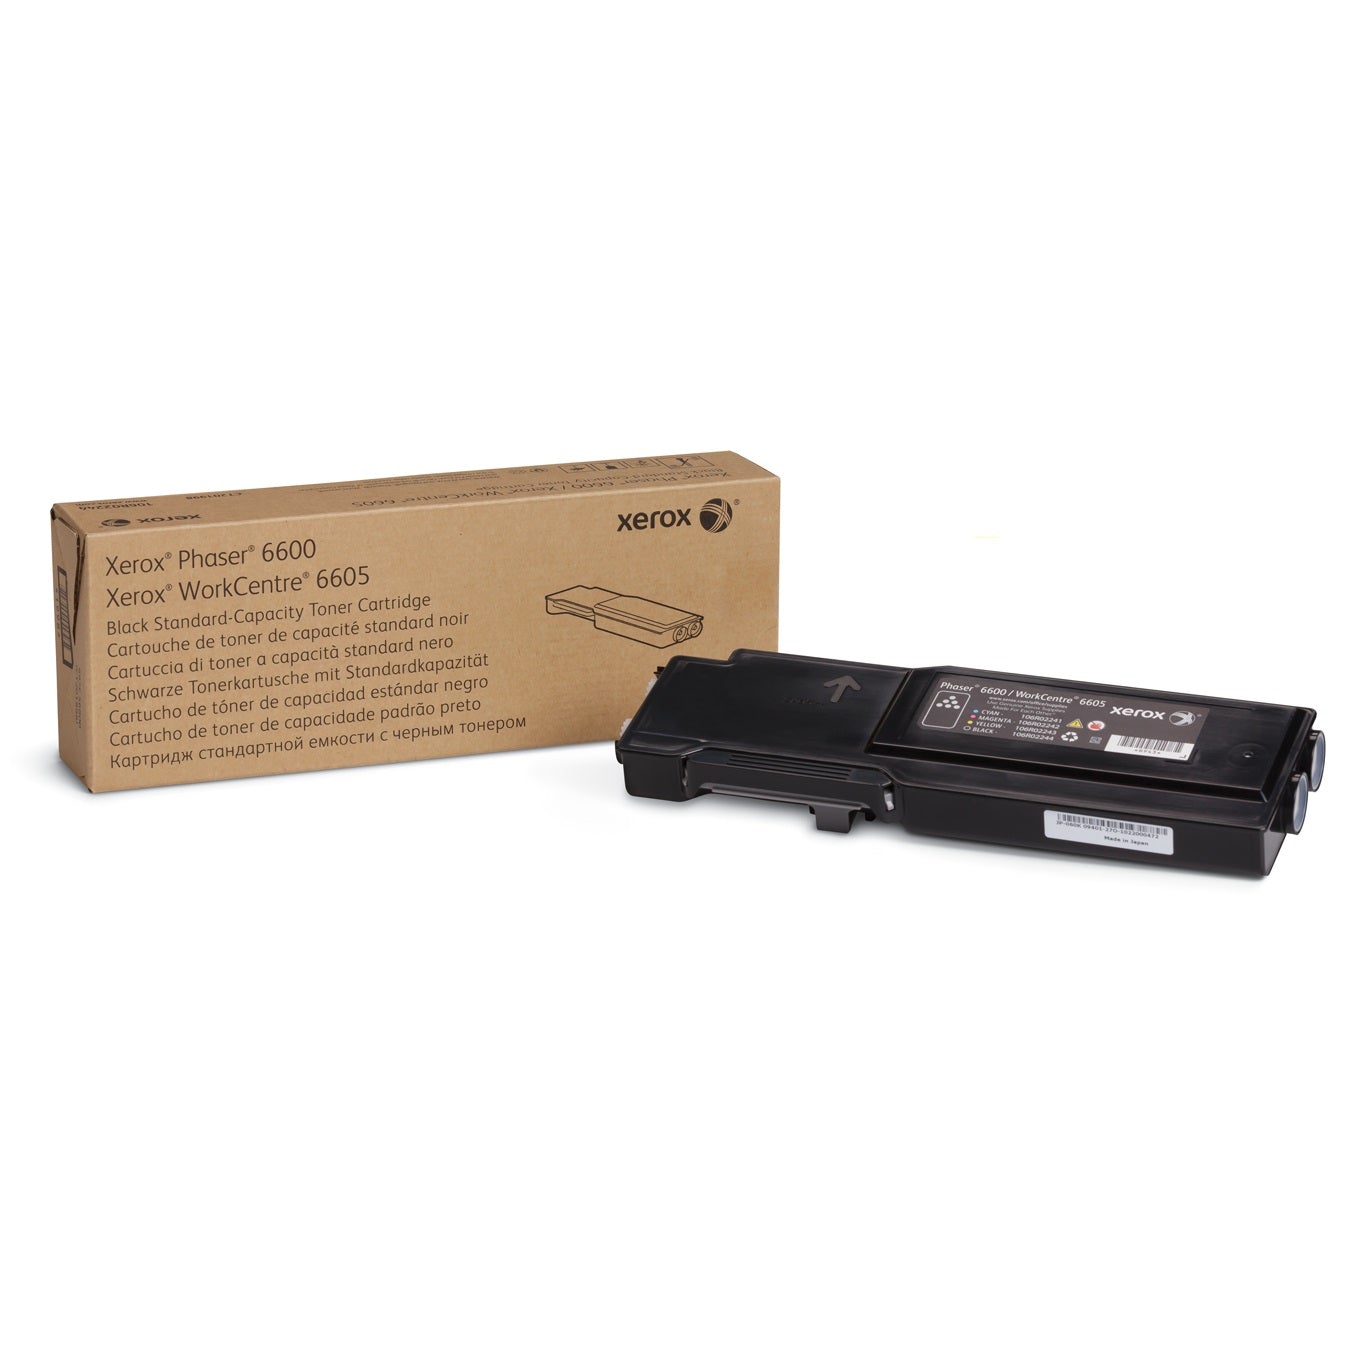 Absolute Toner Xerox 106R02244 Original Genuine OEM Black Standard Yield Toner Cartridge Original Xerox Cartridges